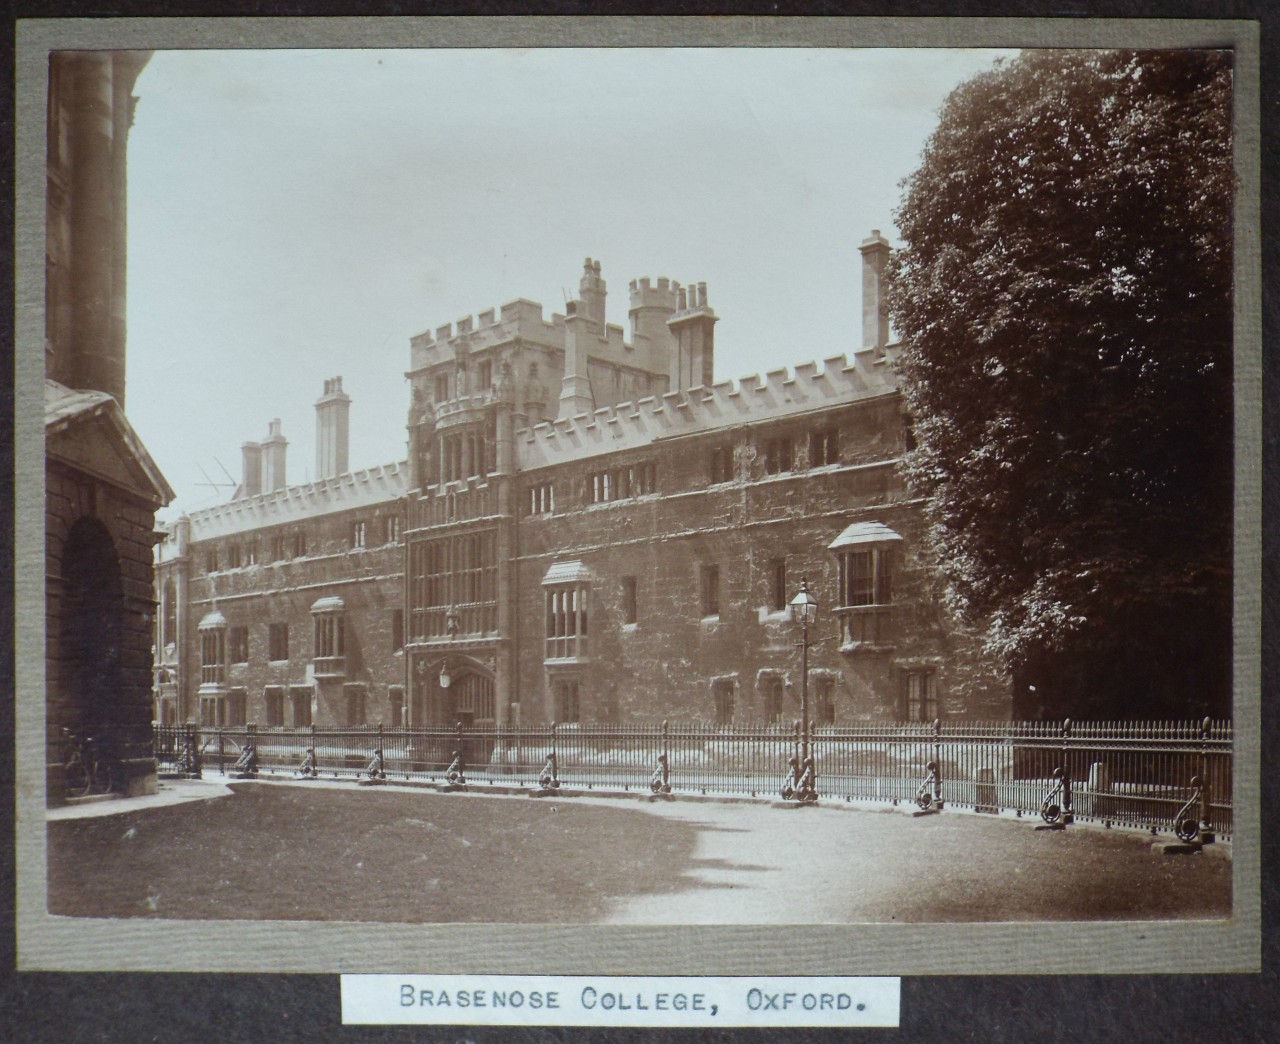 Photograph - Brasenose College, Oxford.